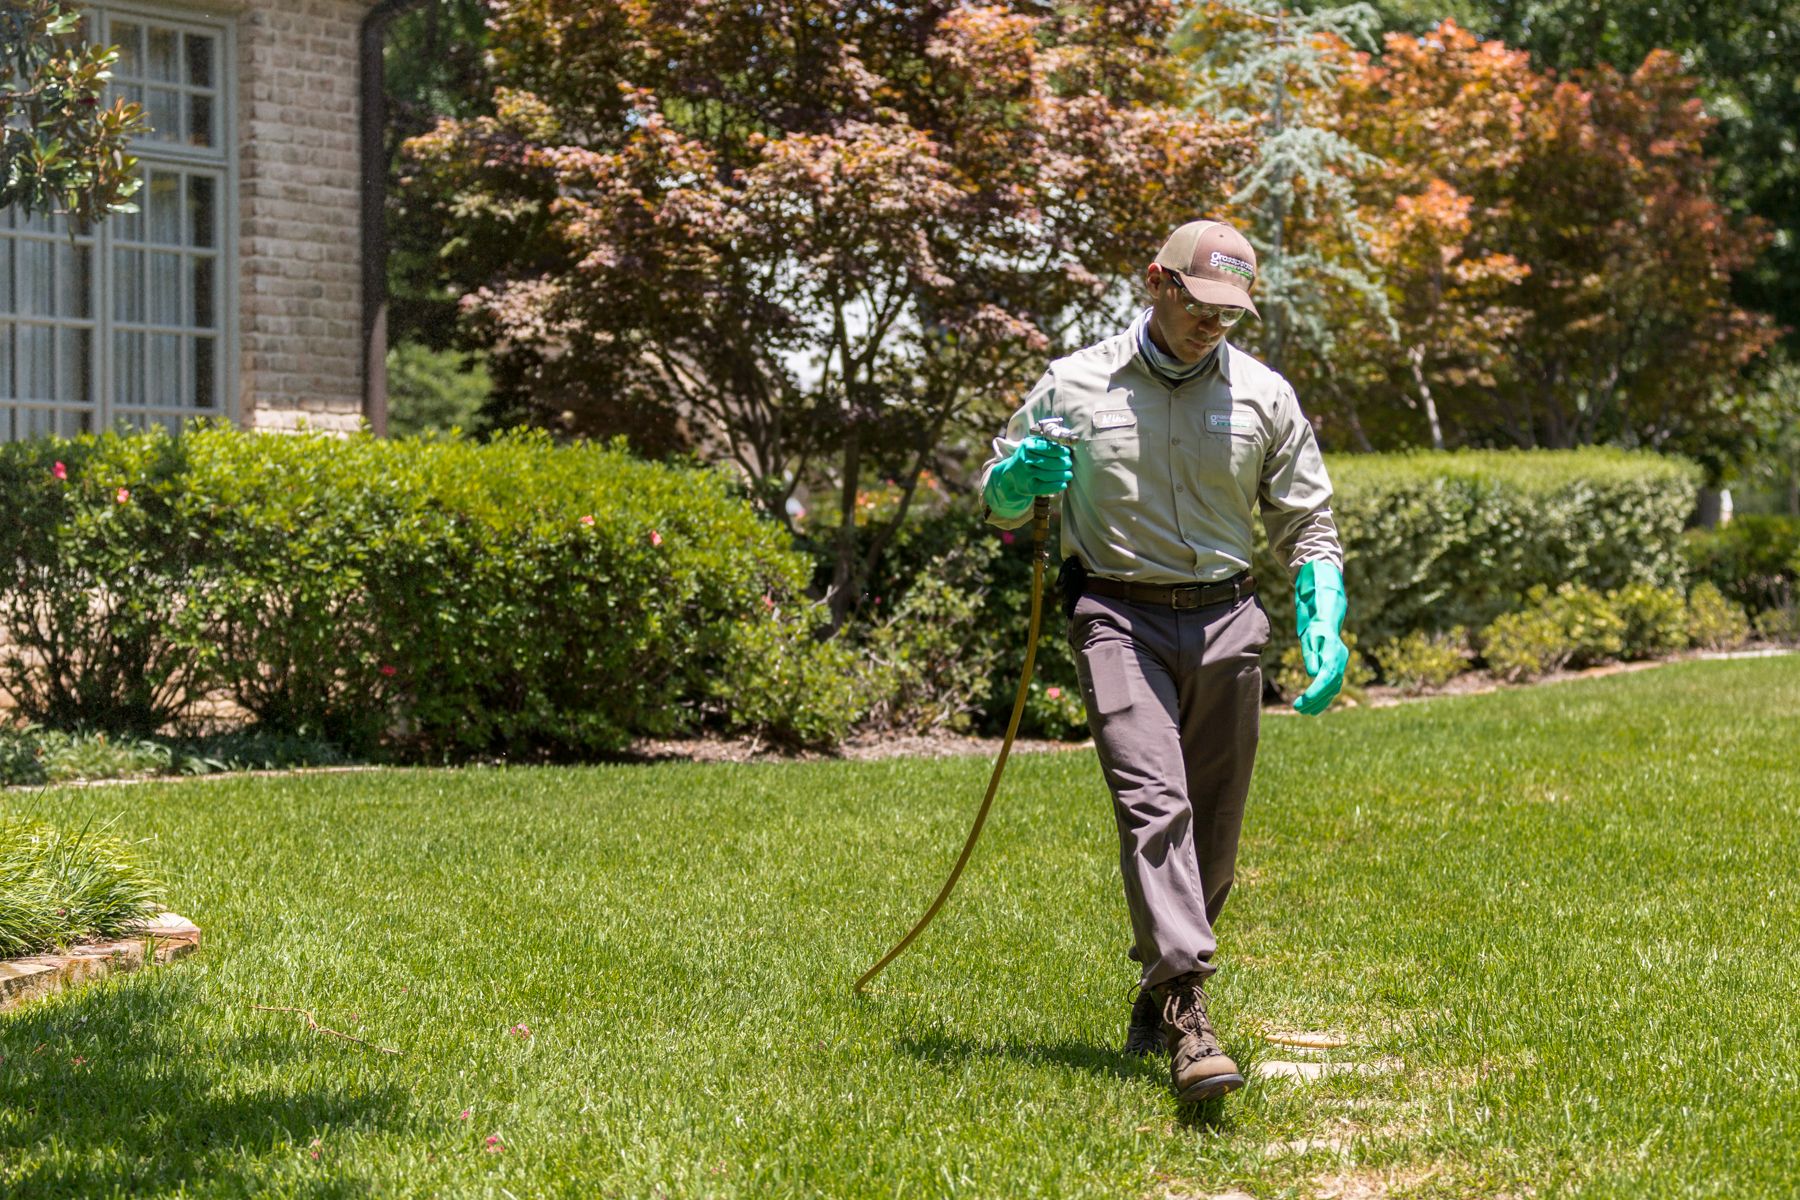 Lawn Care Technician Spraying grass